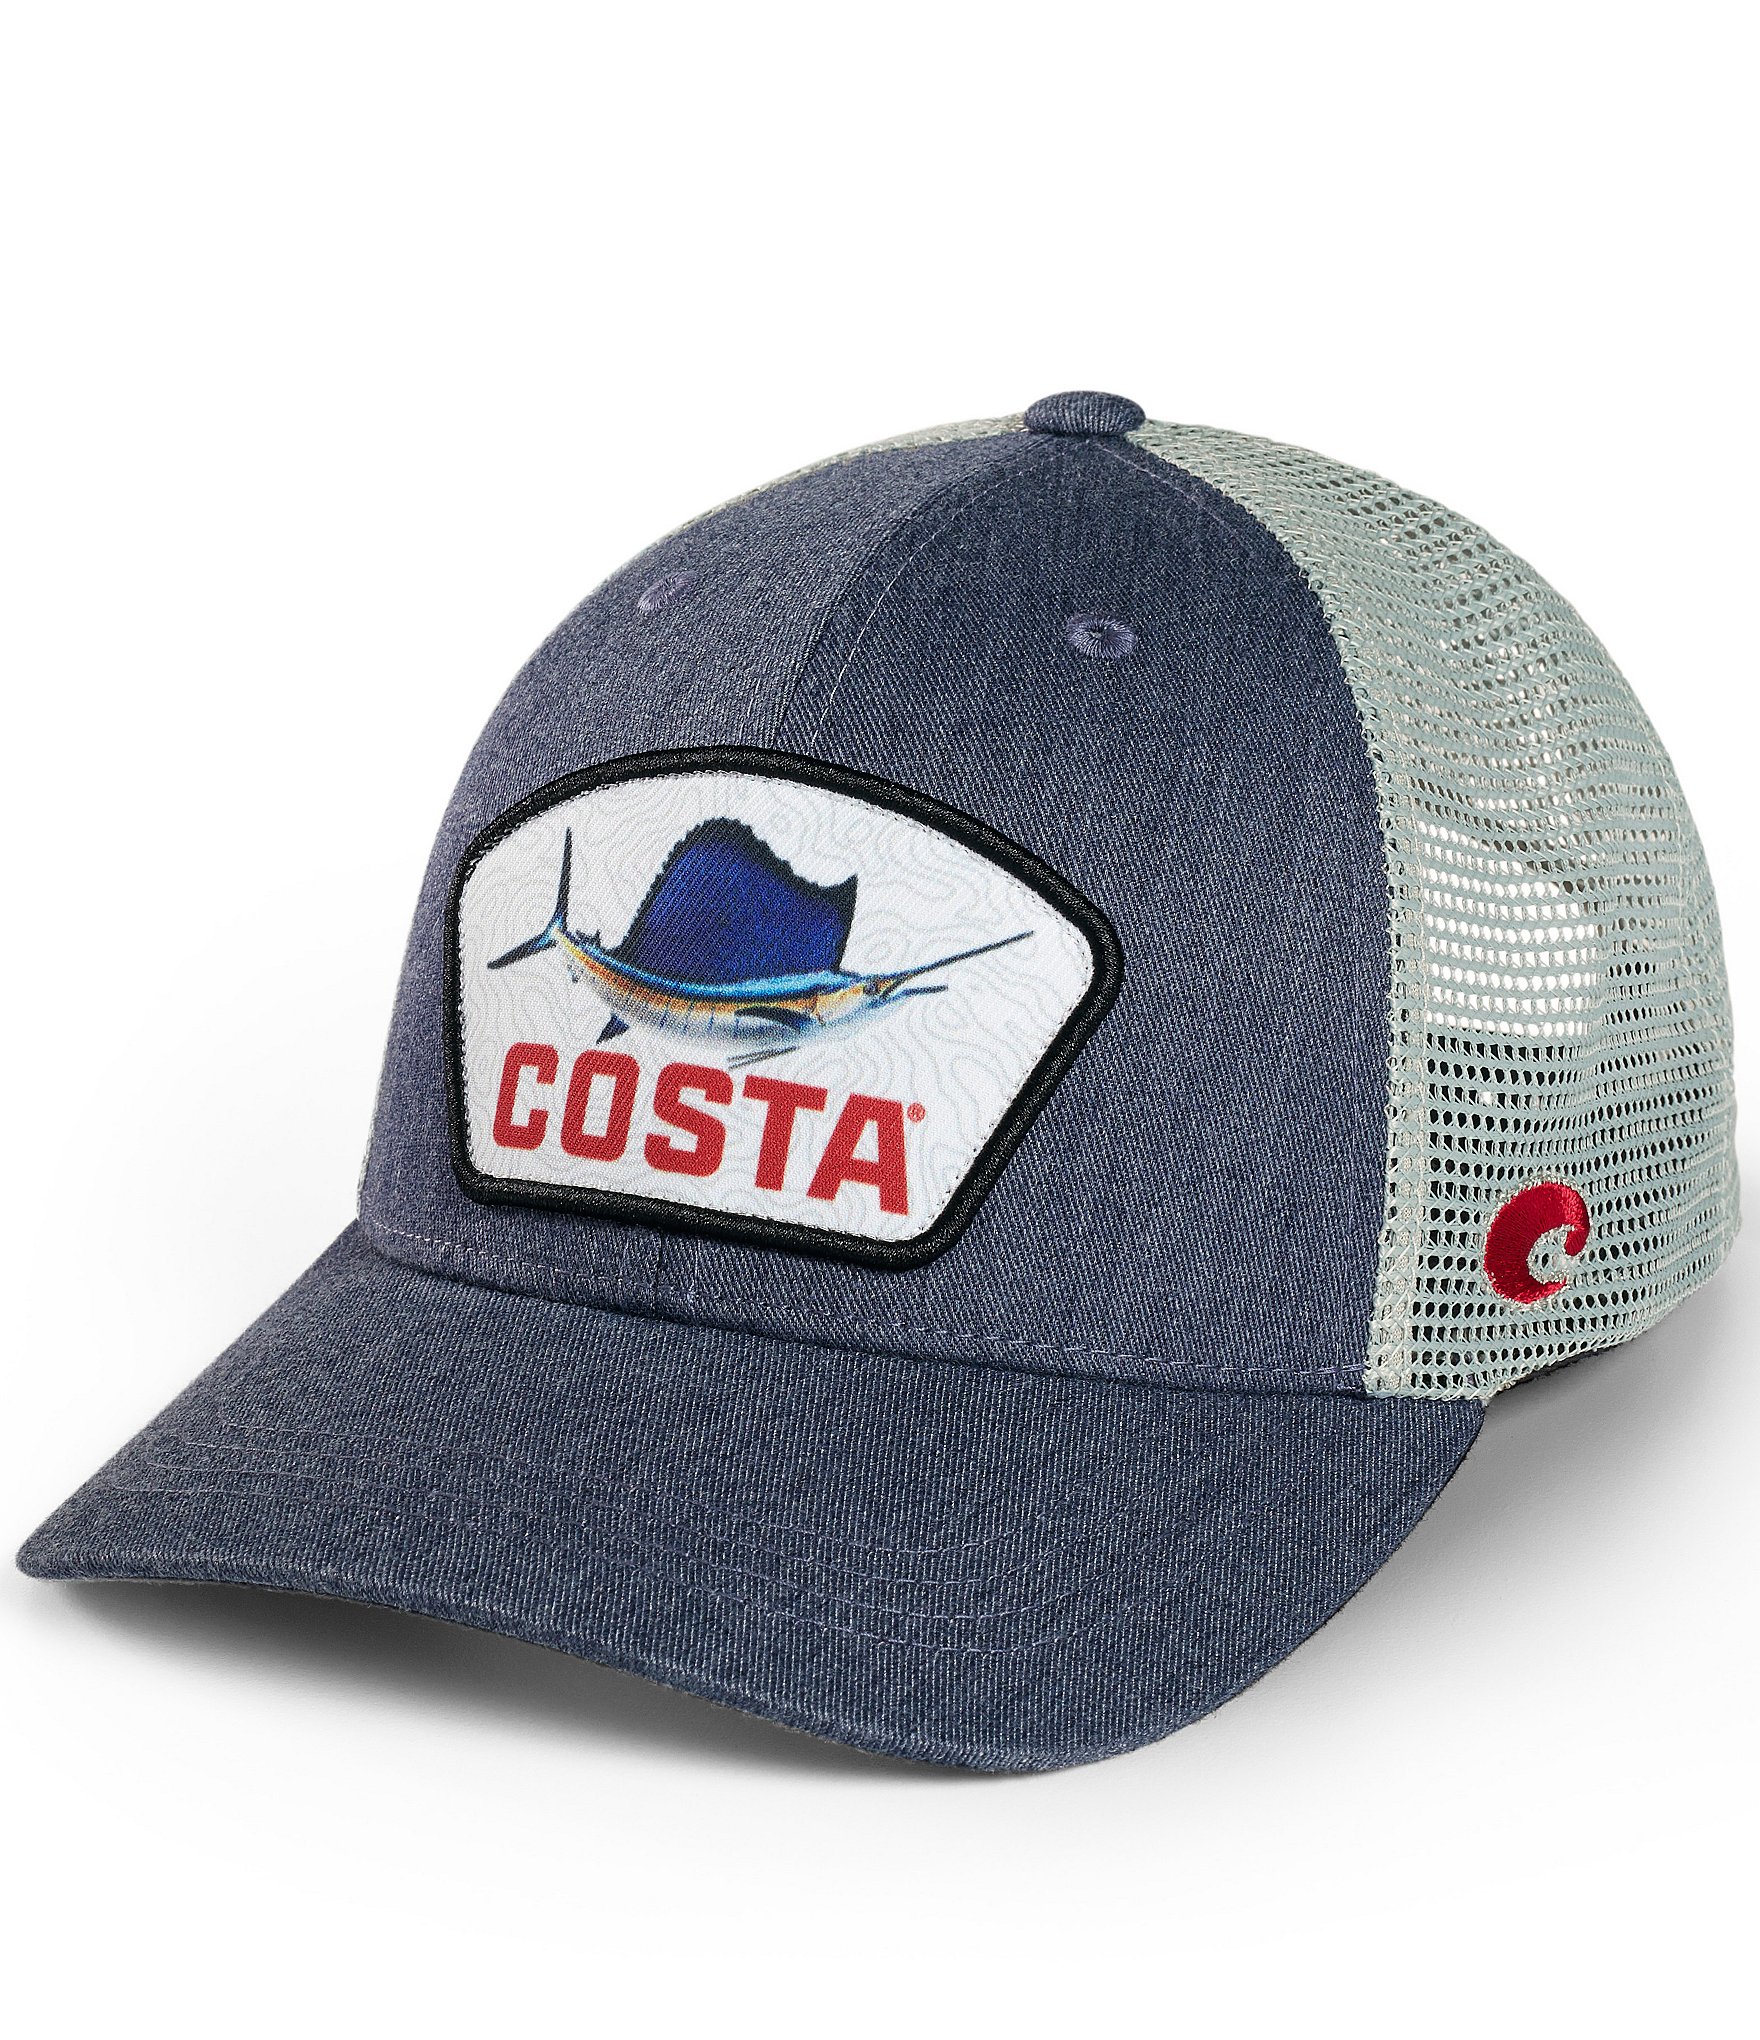 Costa Topo Sailfish Trucker Hat - Navy